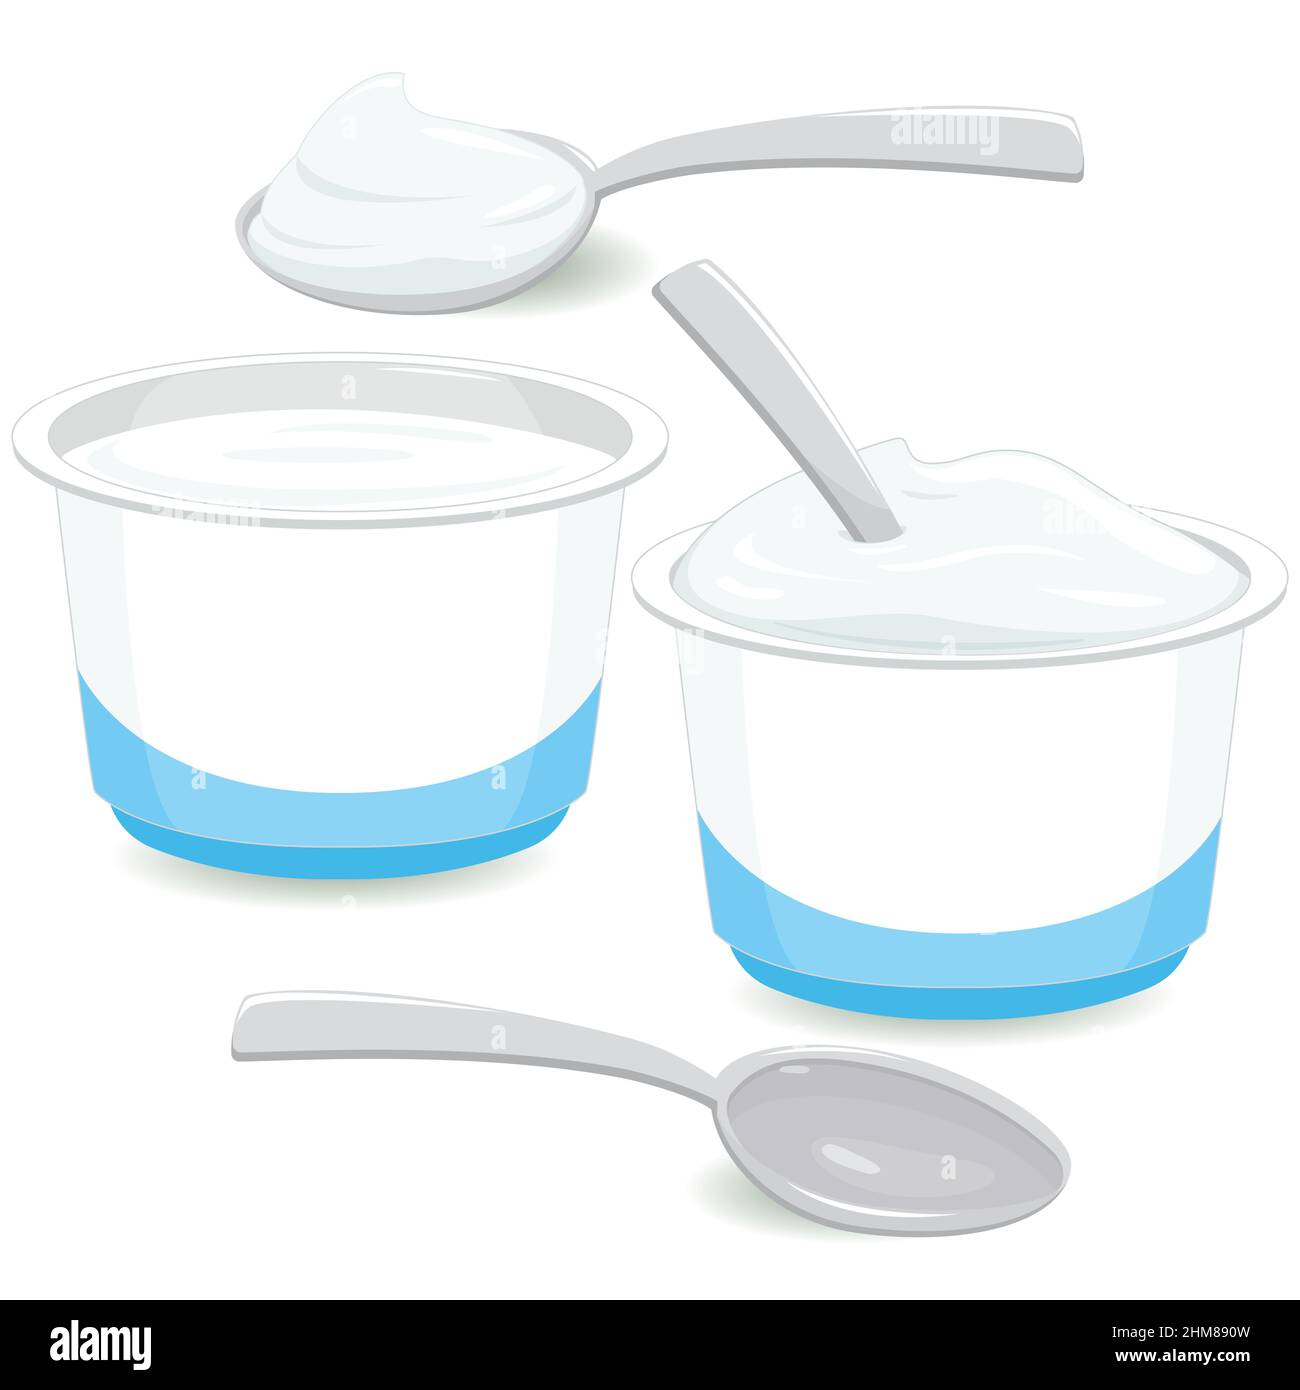 https://c8.alamy.com/comp/2HM890W/yogurt-container-bowls-and-spoons-2HM890W.jpg